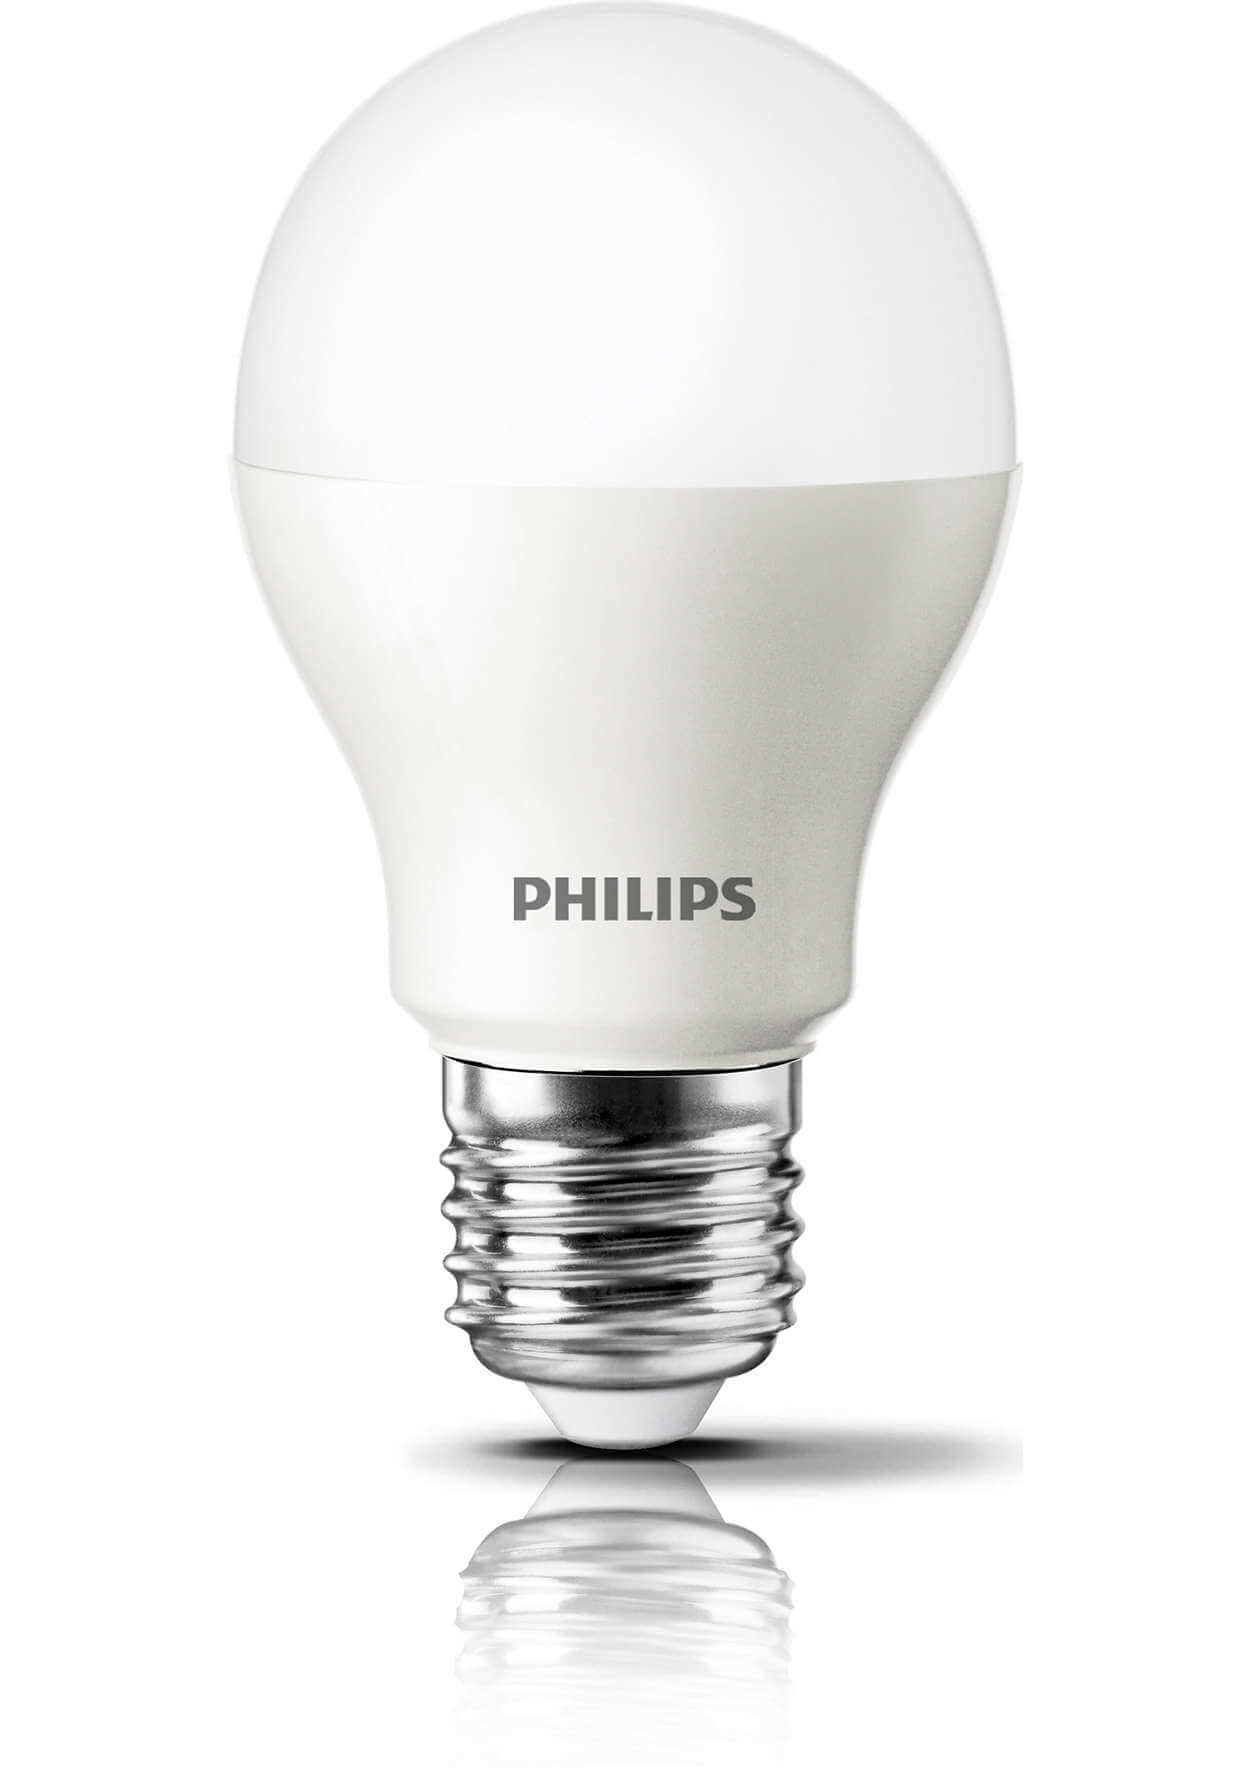 Harga Lampu Philips LED Kilau 7w